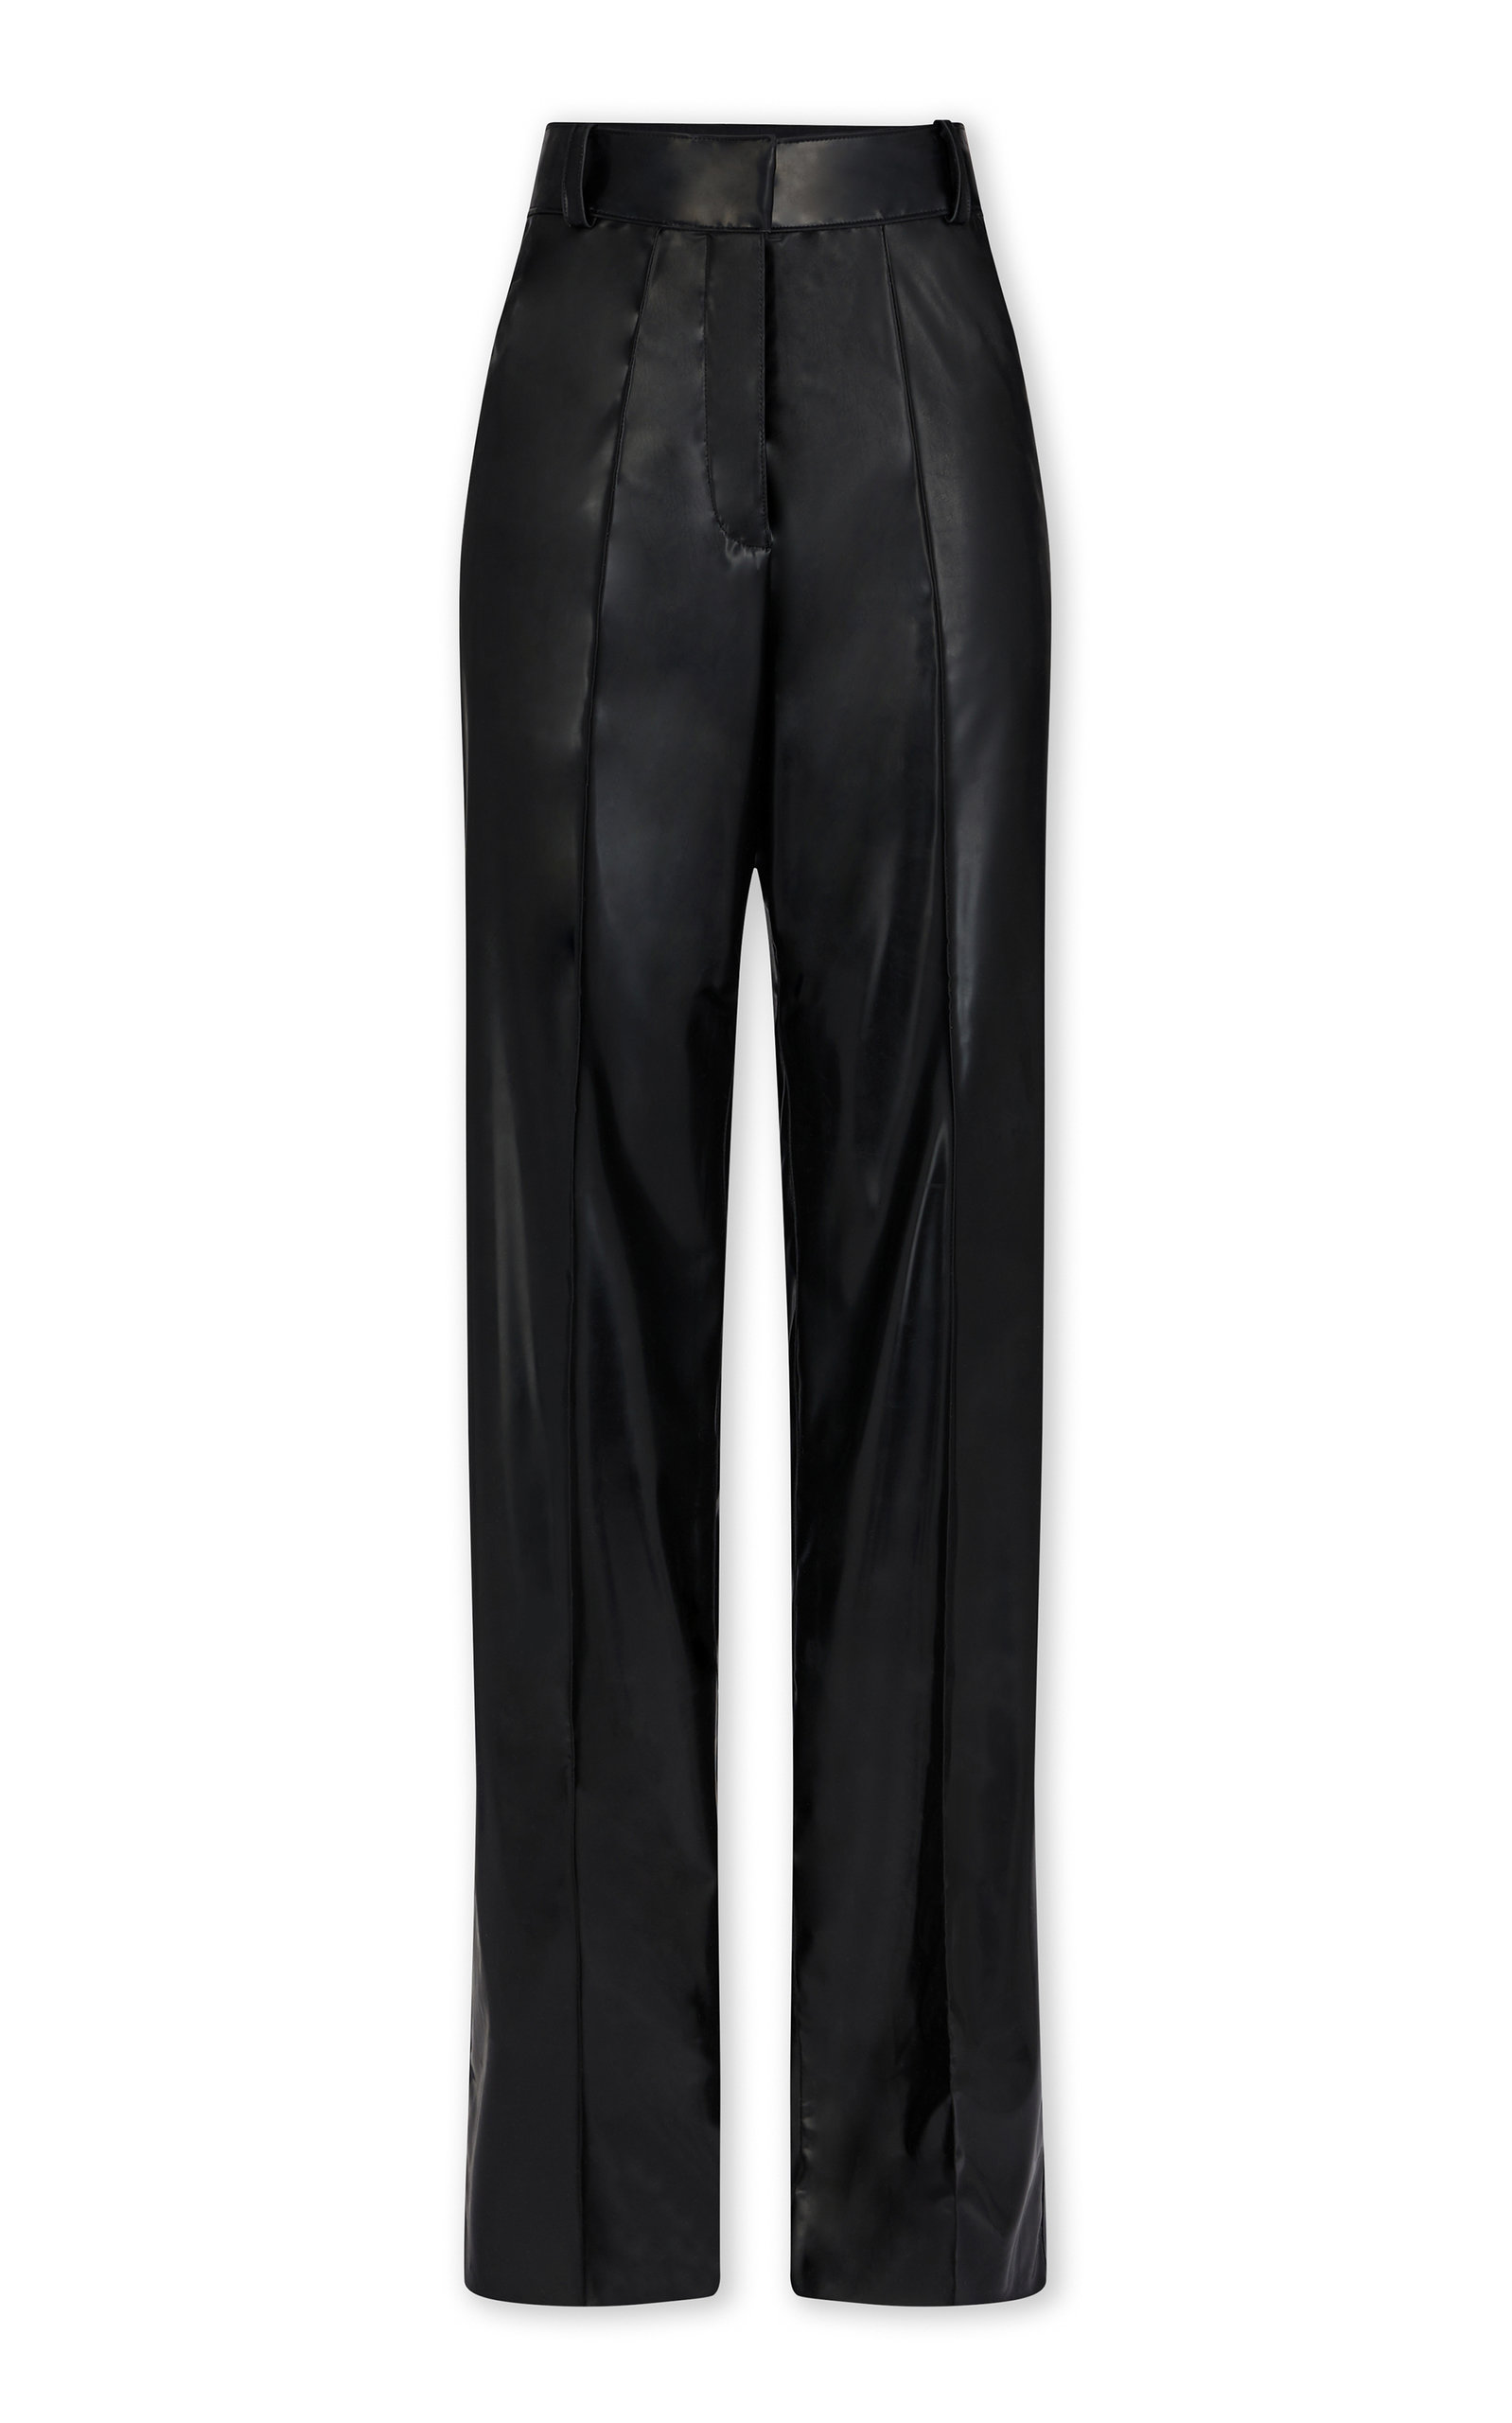 Paco Rabanne - Women's Latex Straight-Leg Pants - Black - Only At Moda Operandi